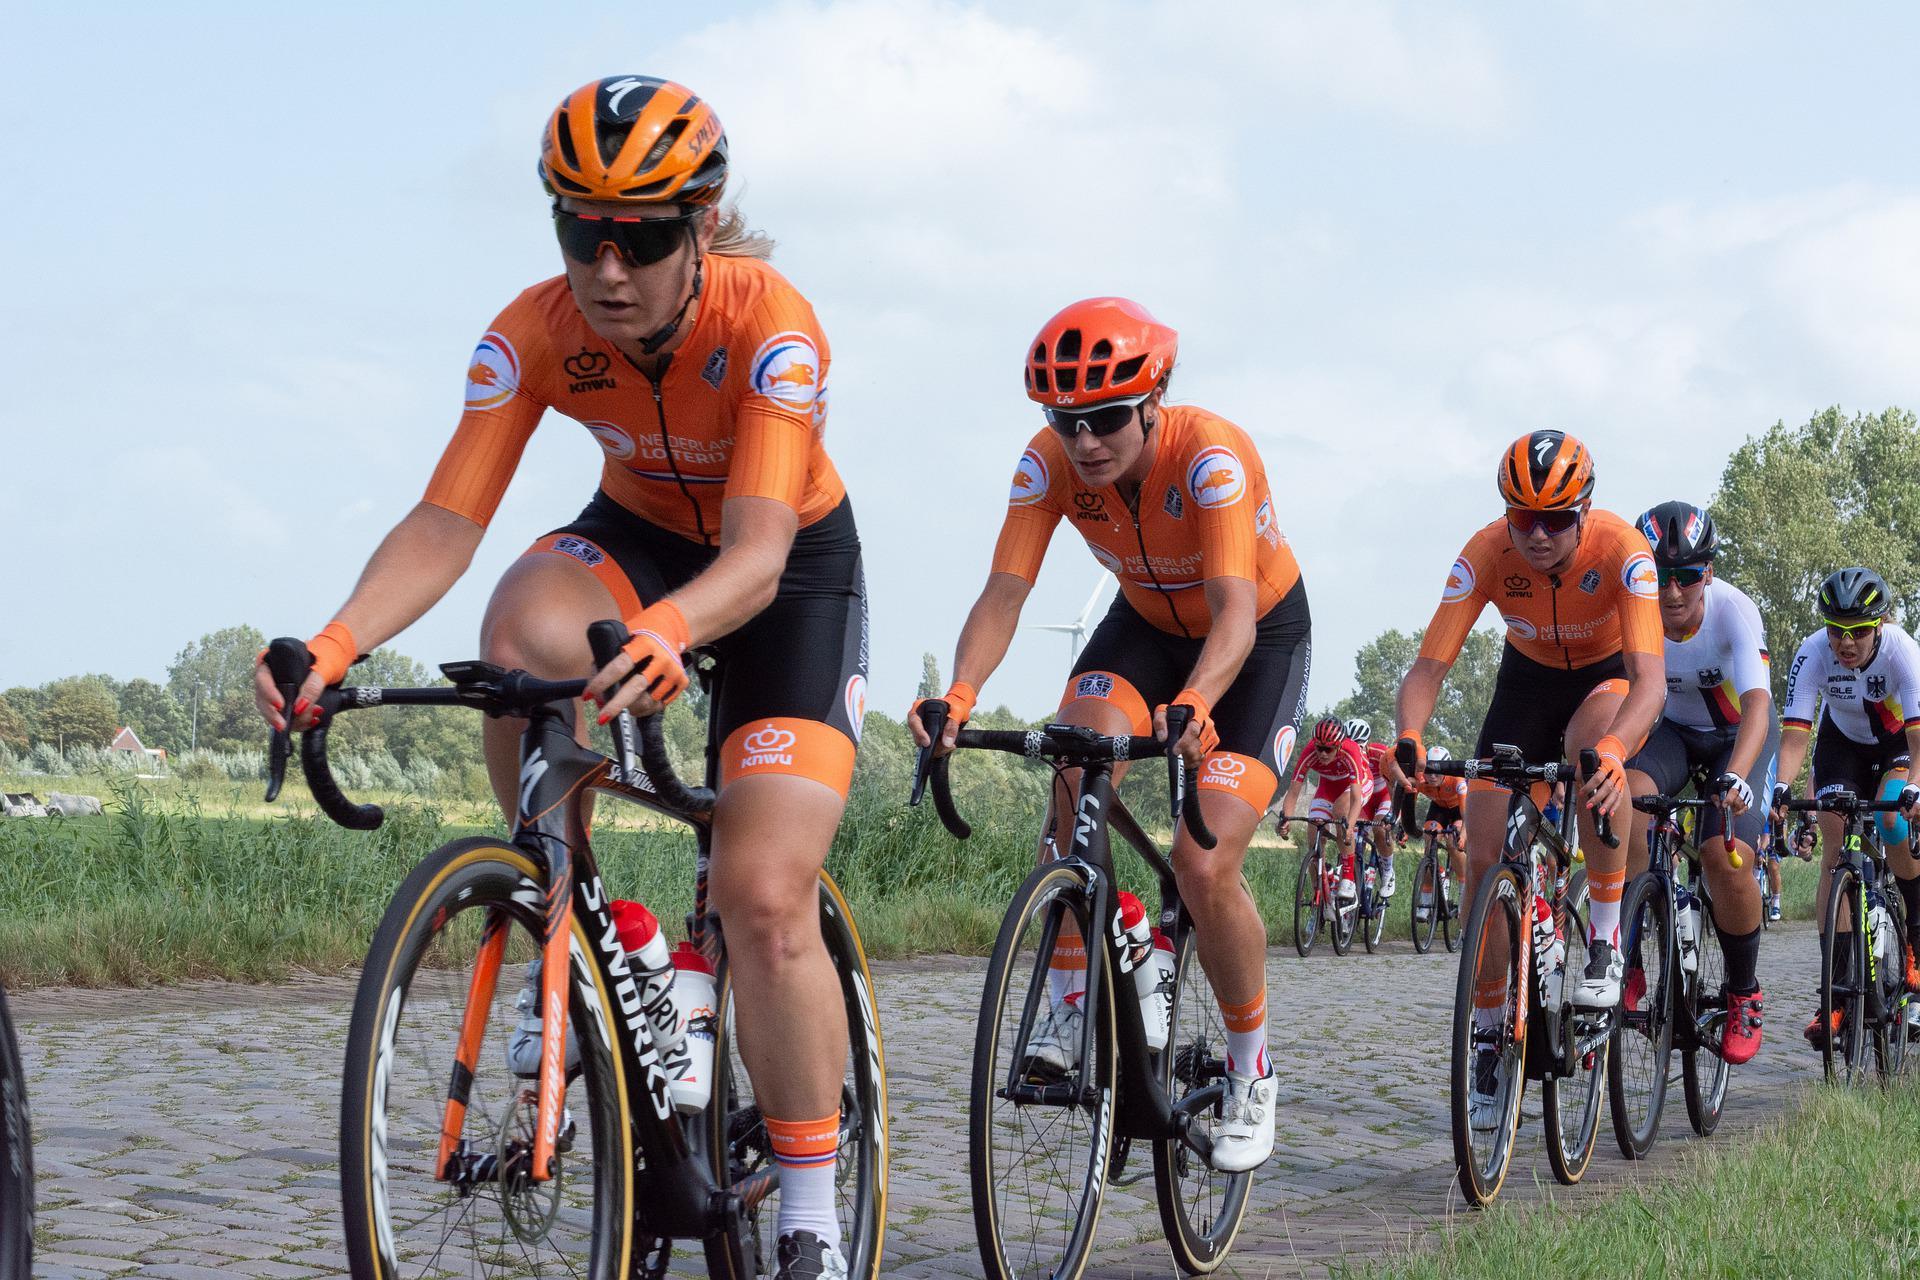 groep fietsers in oranje fietskleding tijdens het wereldkampioenschap wielrennen in Alkmaar